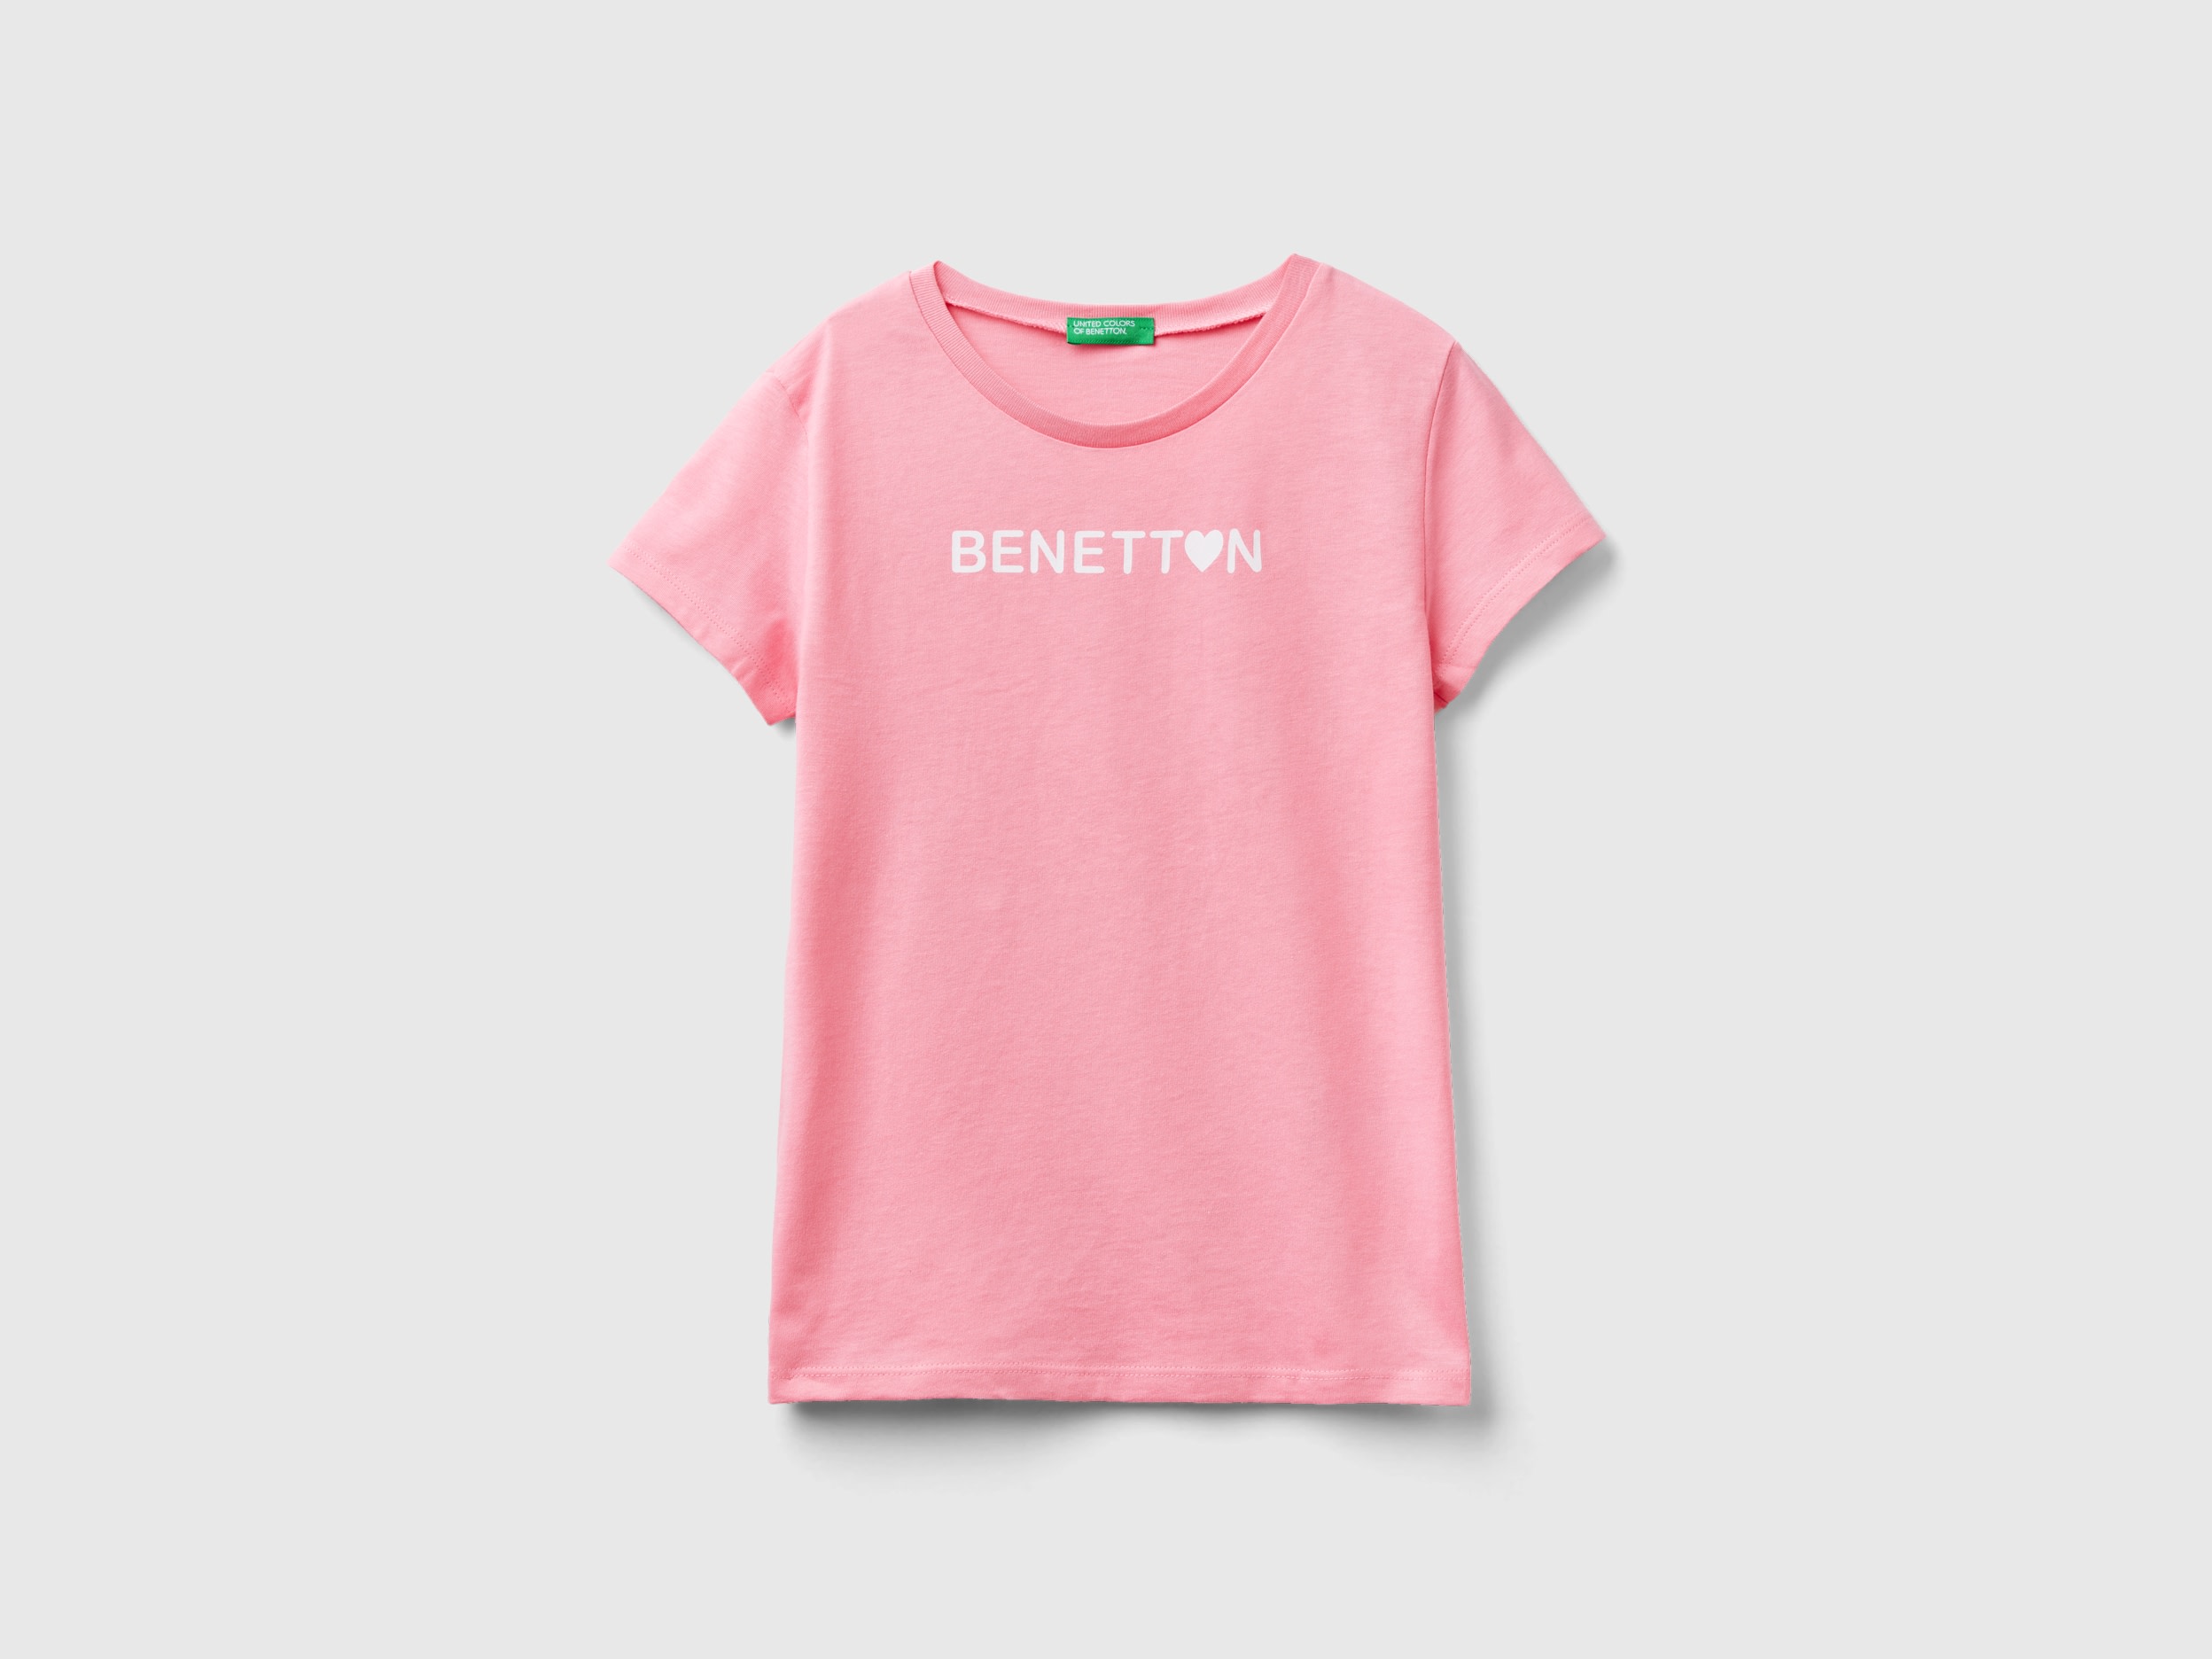 Benetton, 100% Cotton T-shirt With Logo, size L, Pink, Kids